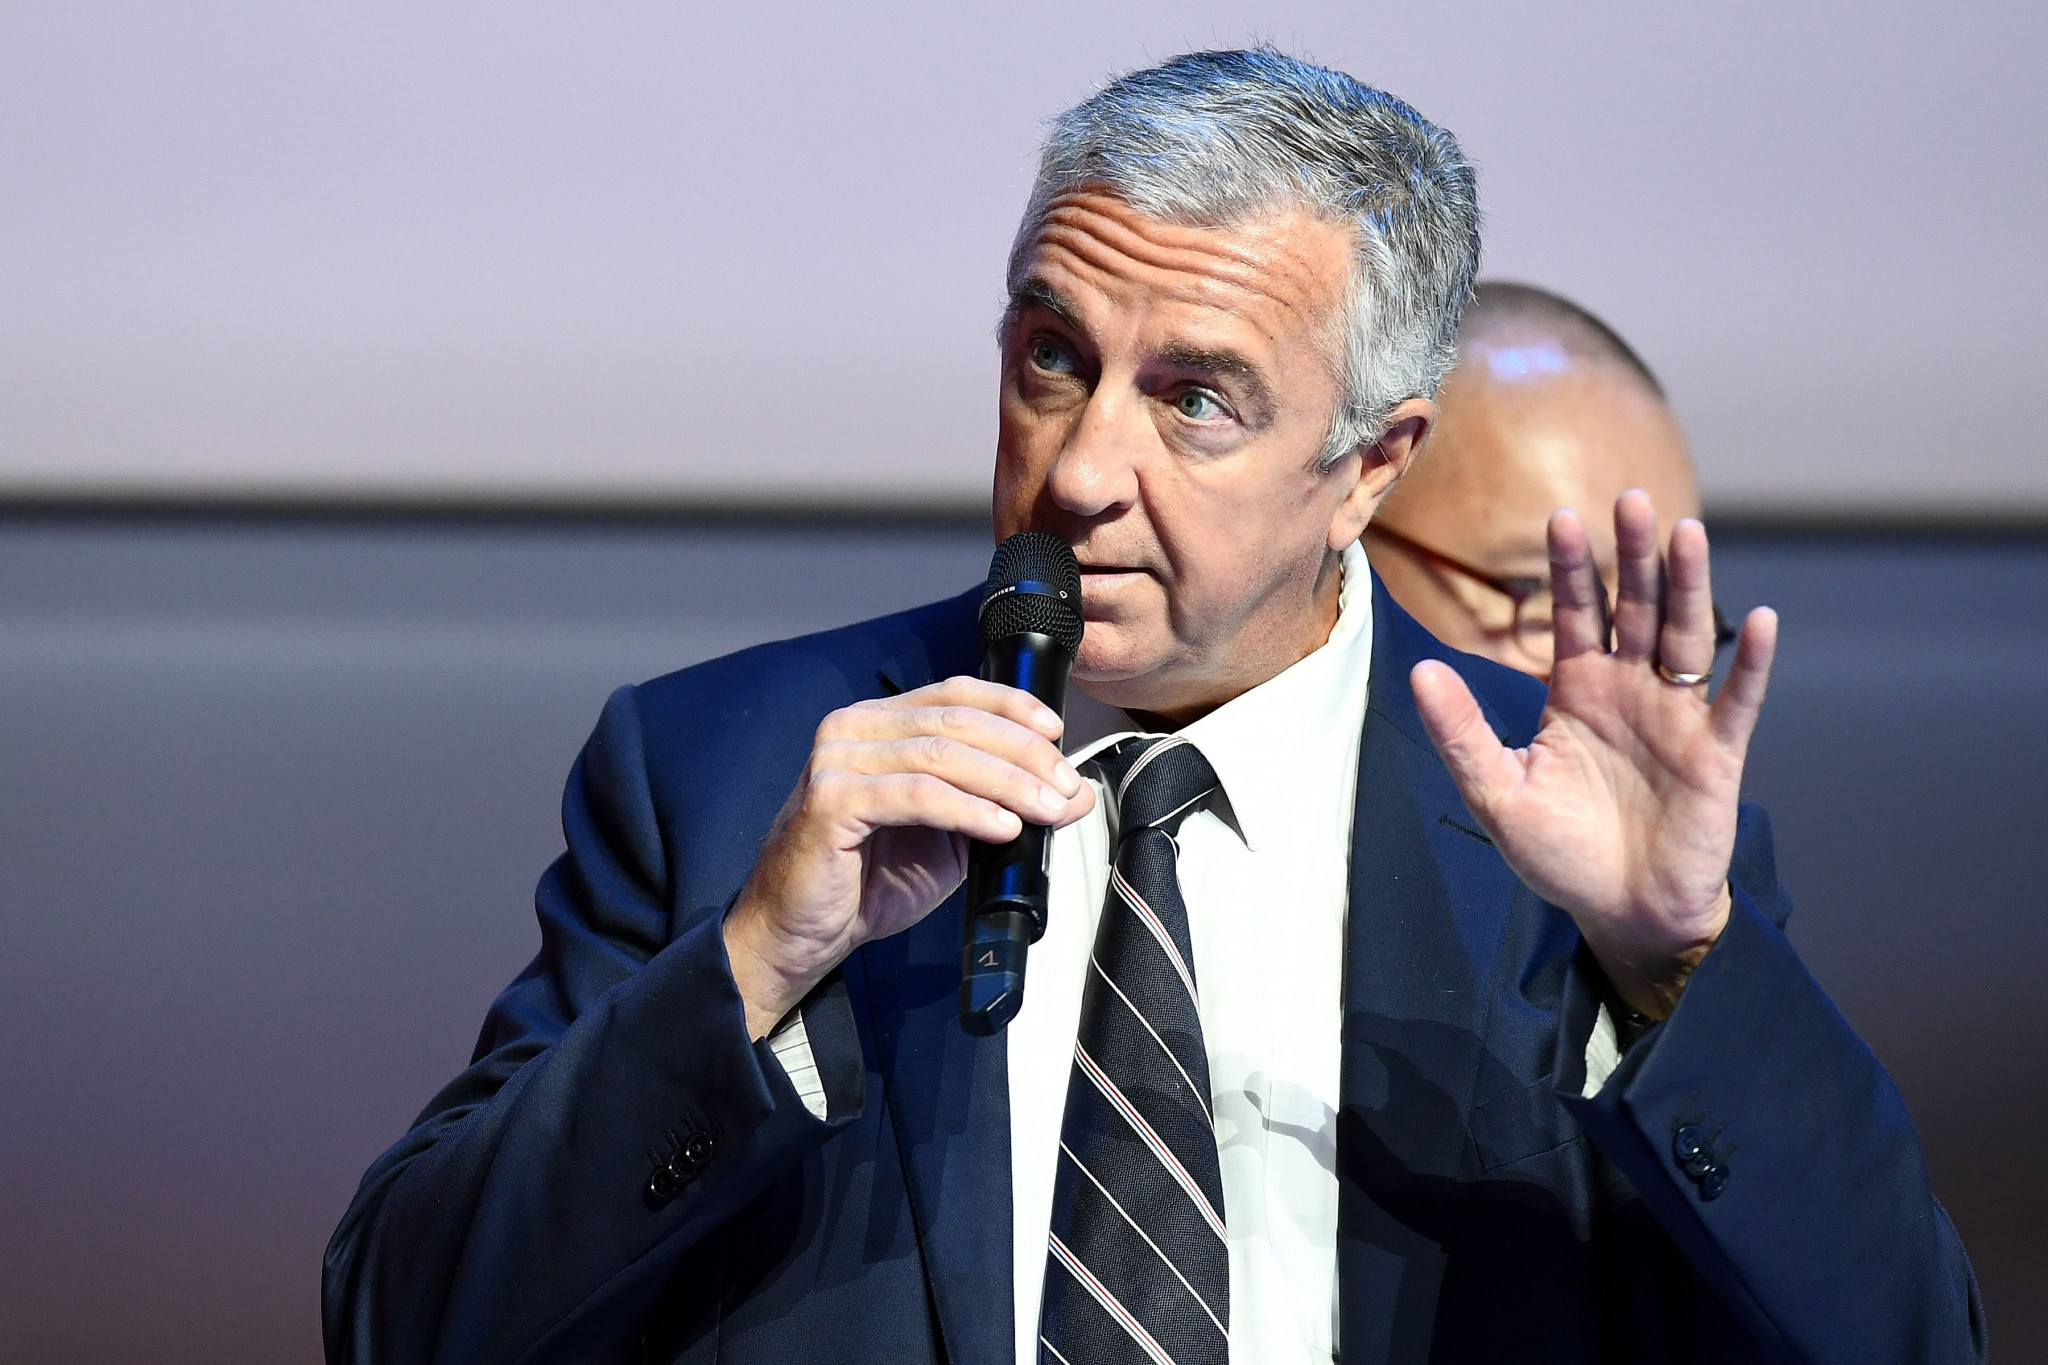 IIHF President Luc Tardif said the organisation 